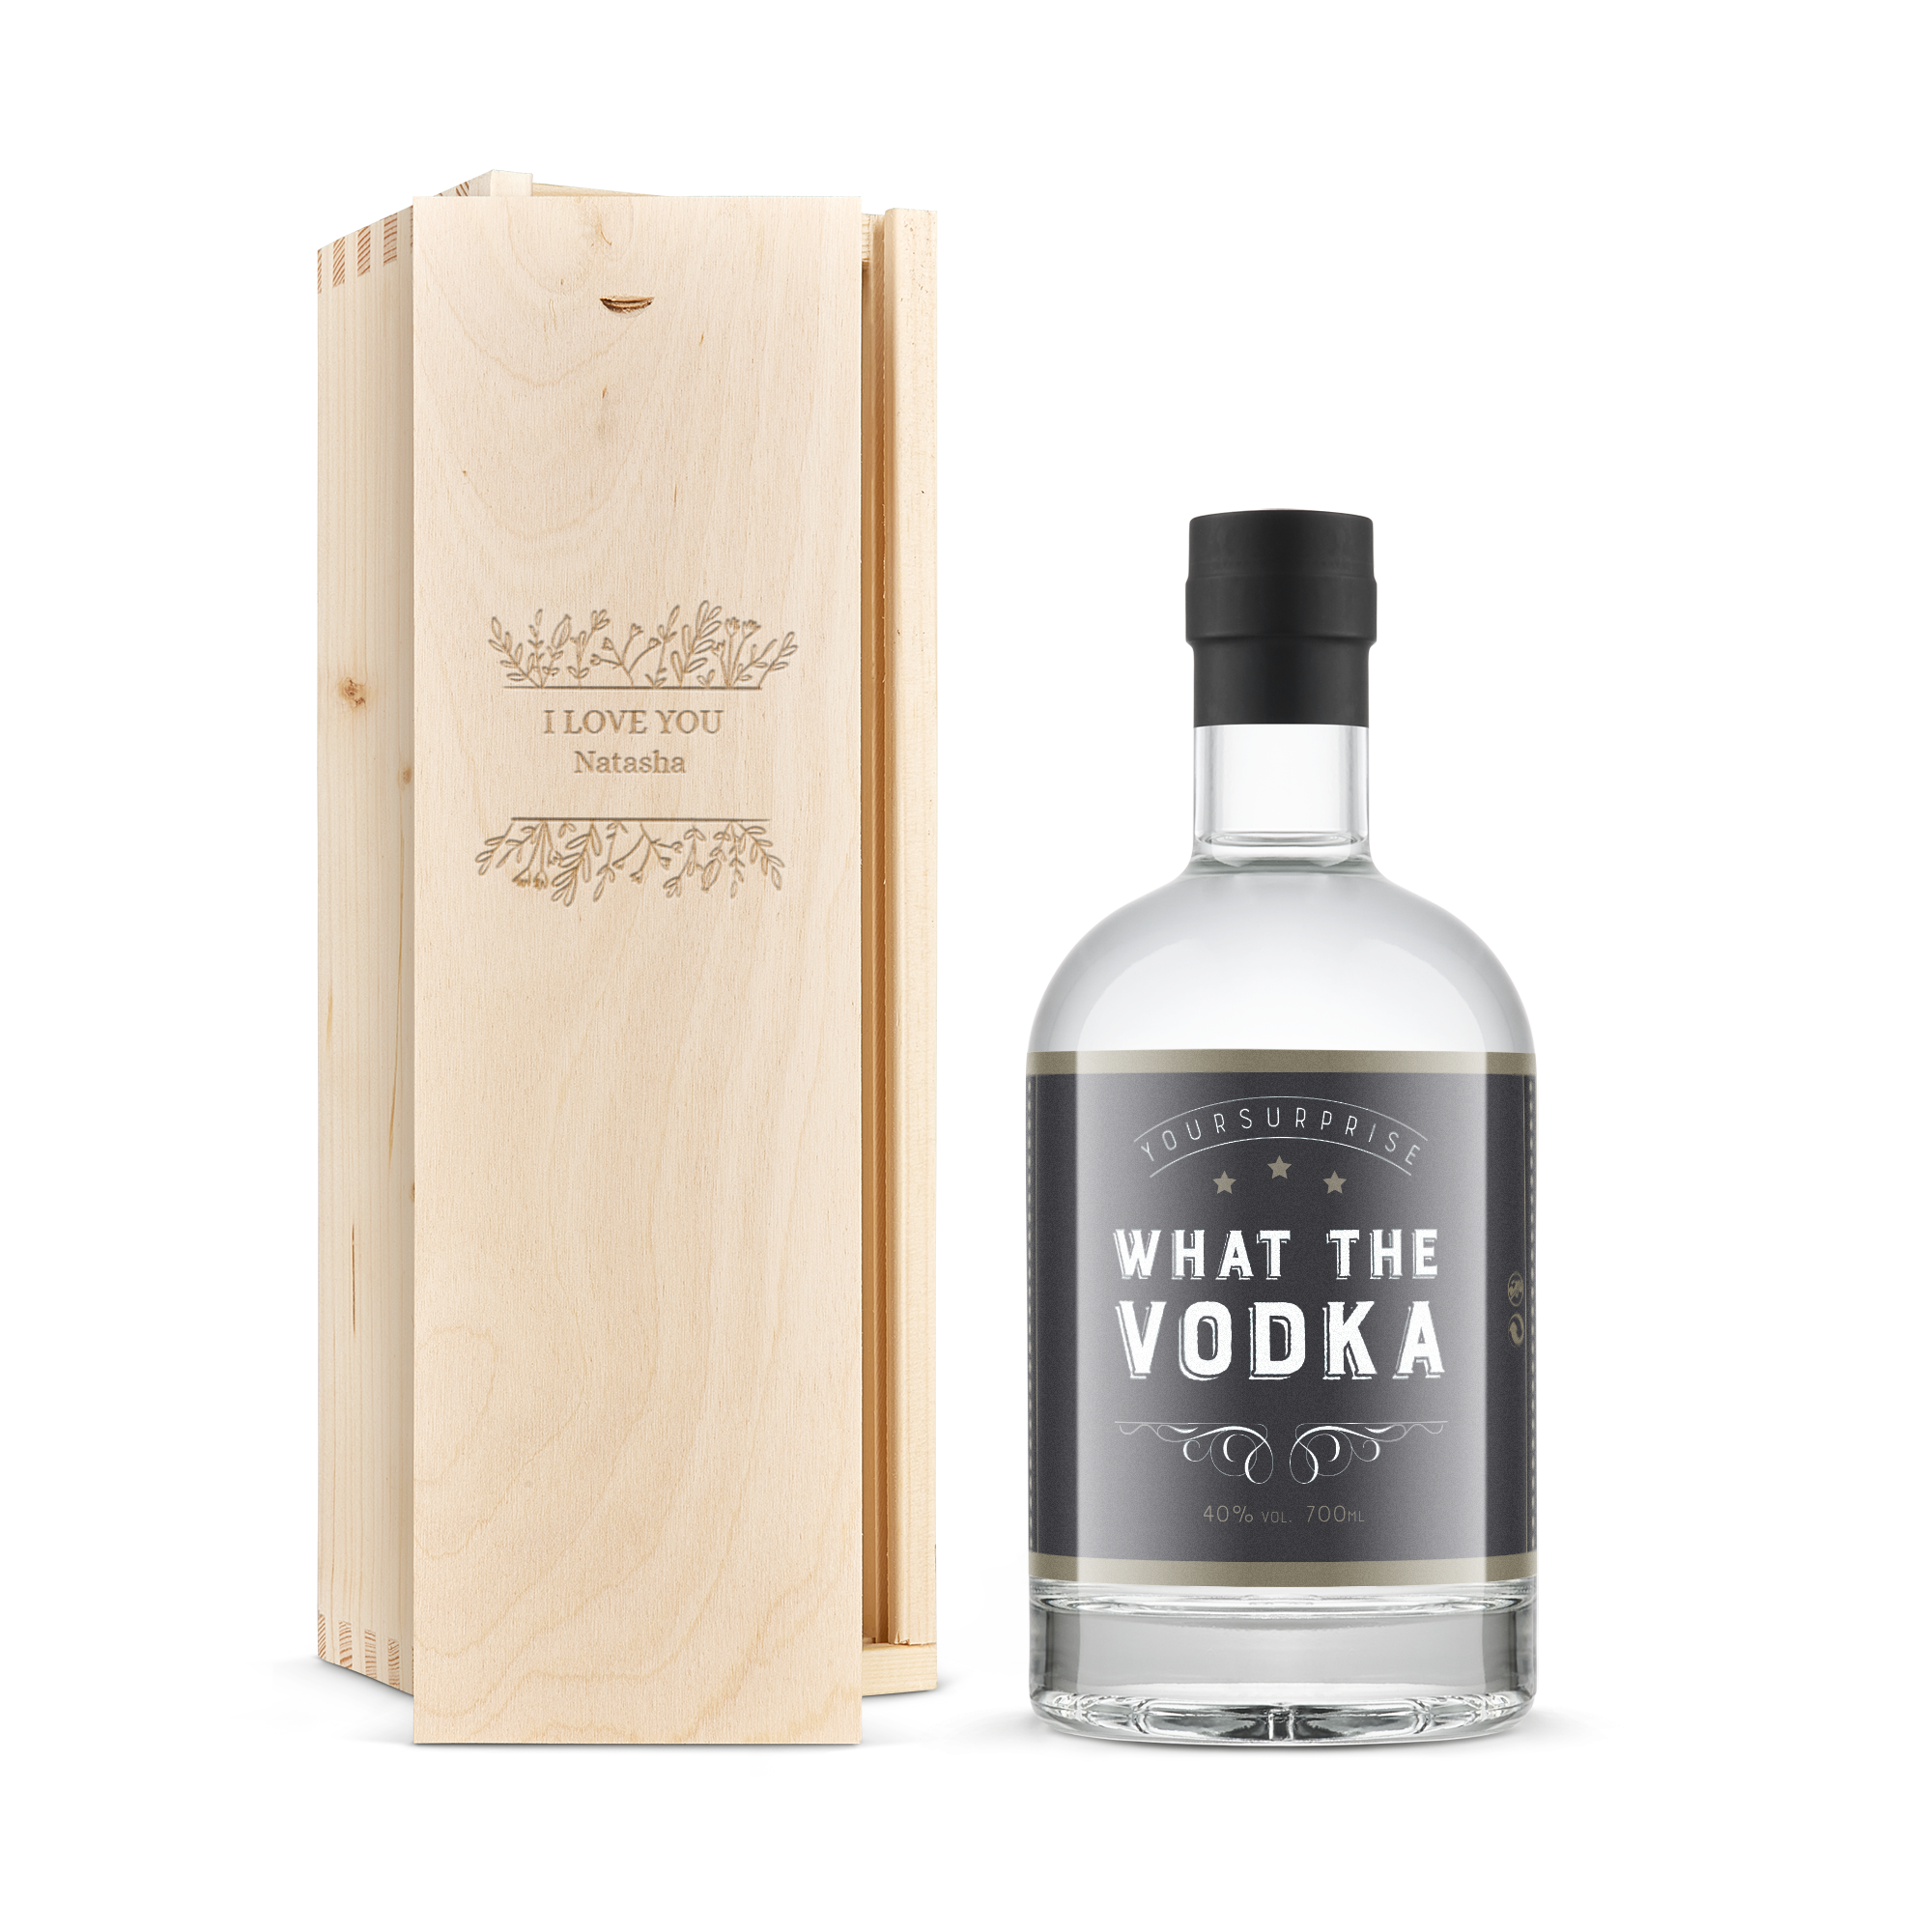 YourSurprise vodka in engraved case